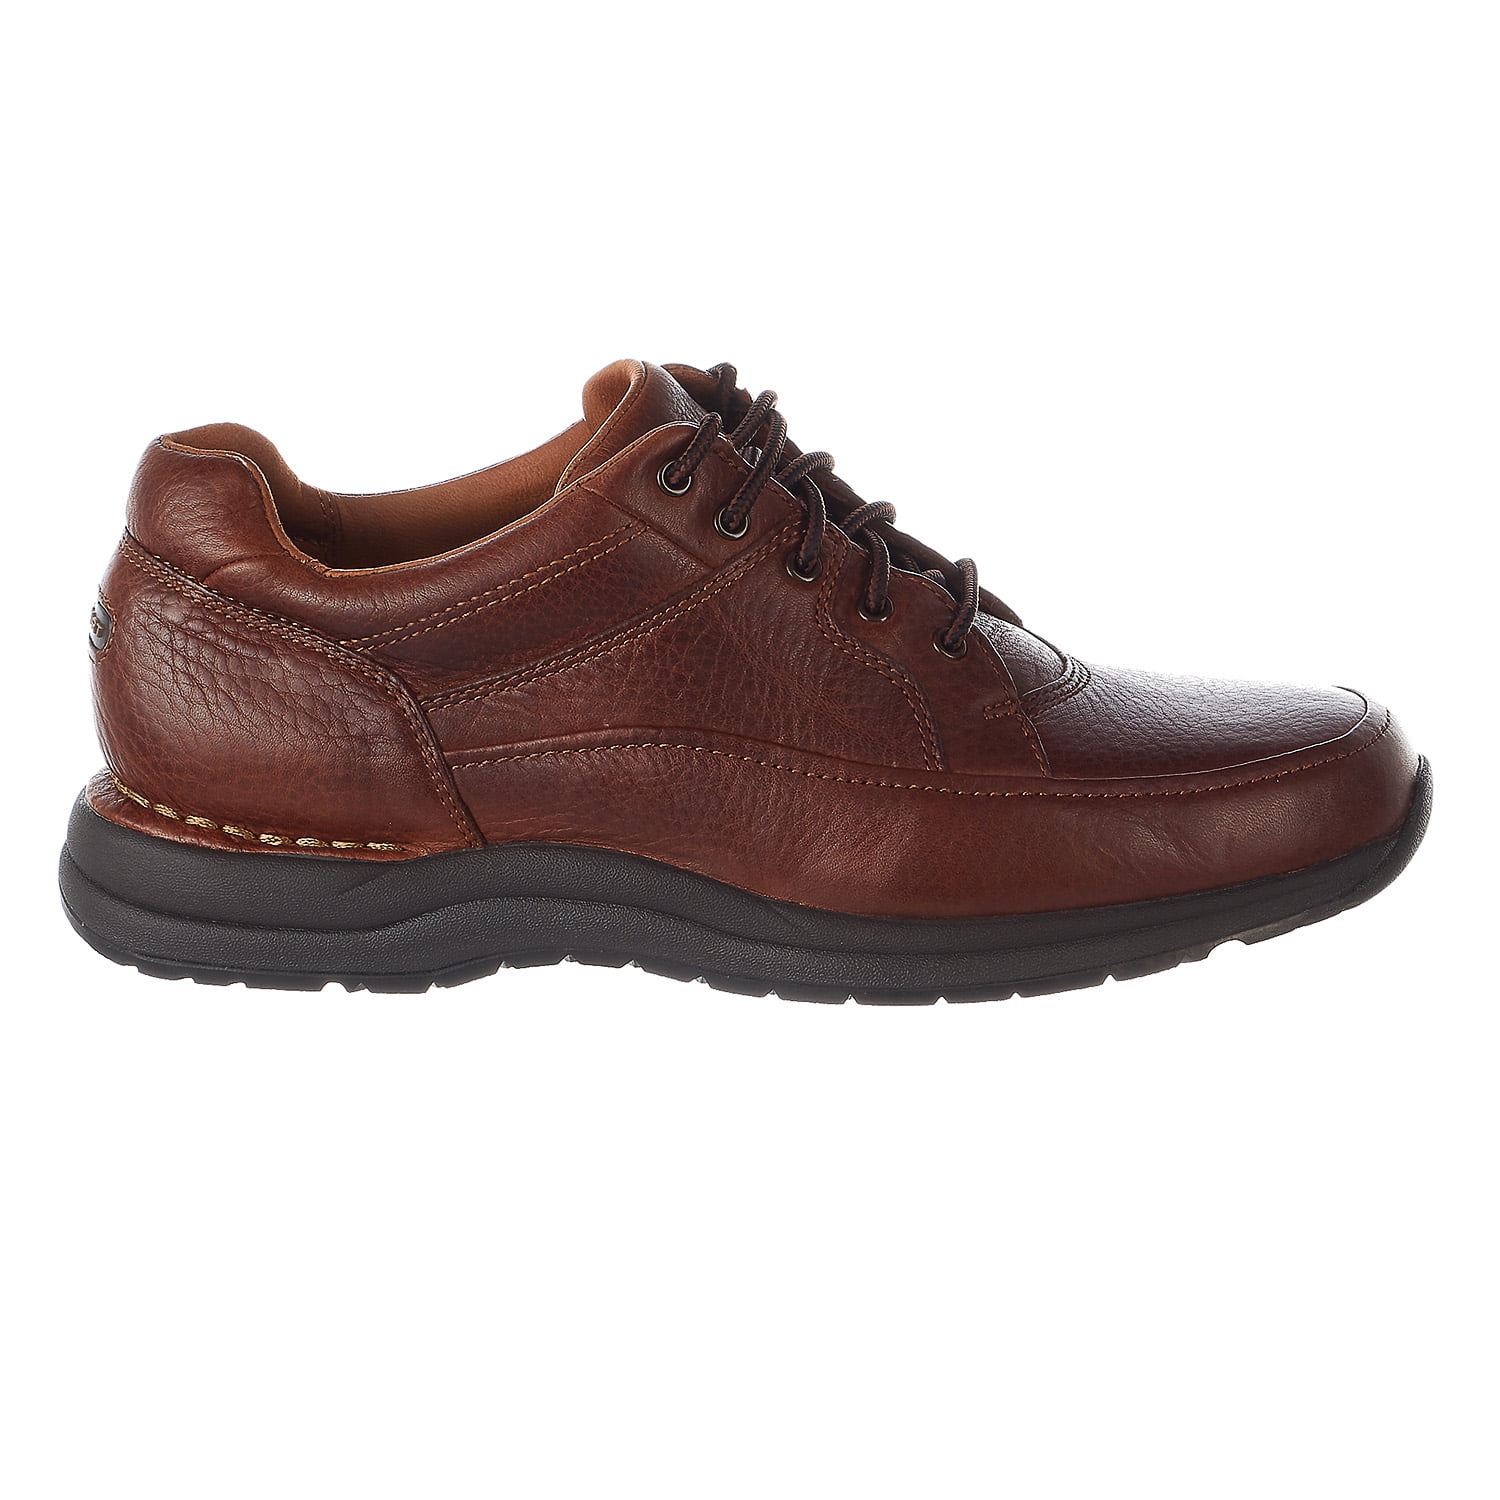 Rockport Edge Hill Shoes - Brown - Mens - 12 - Walmart.com